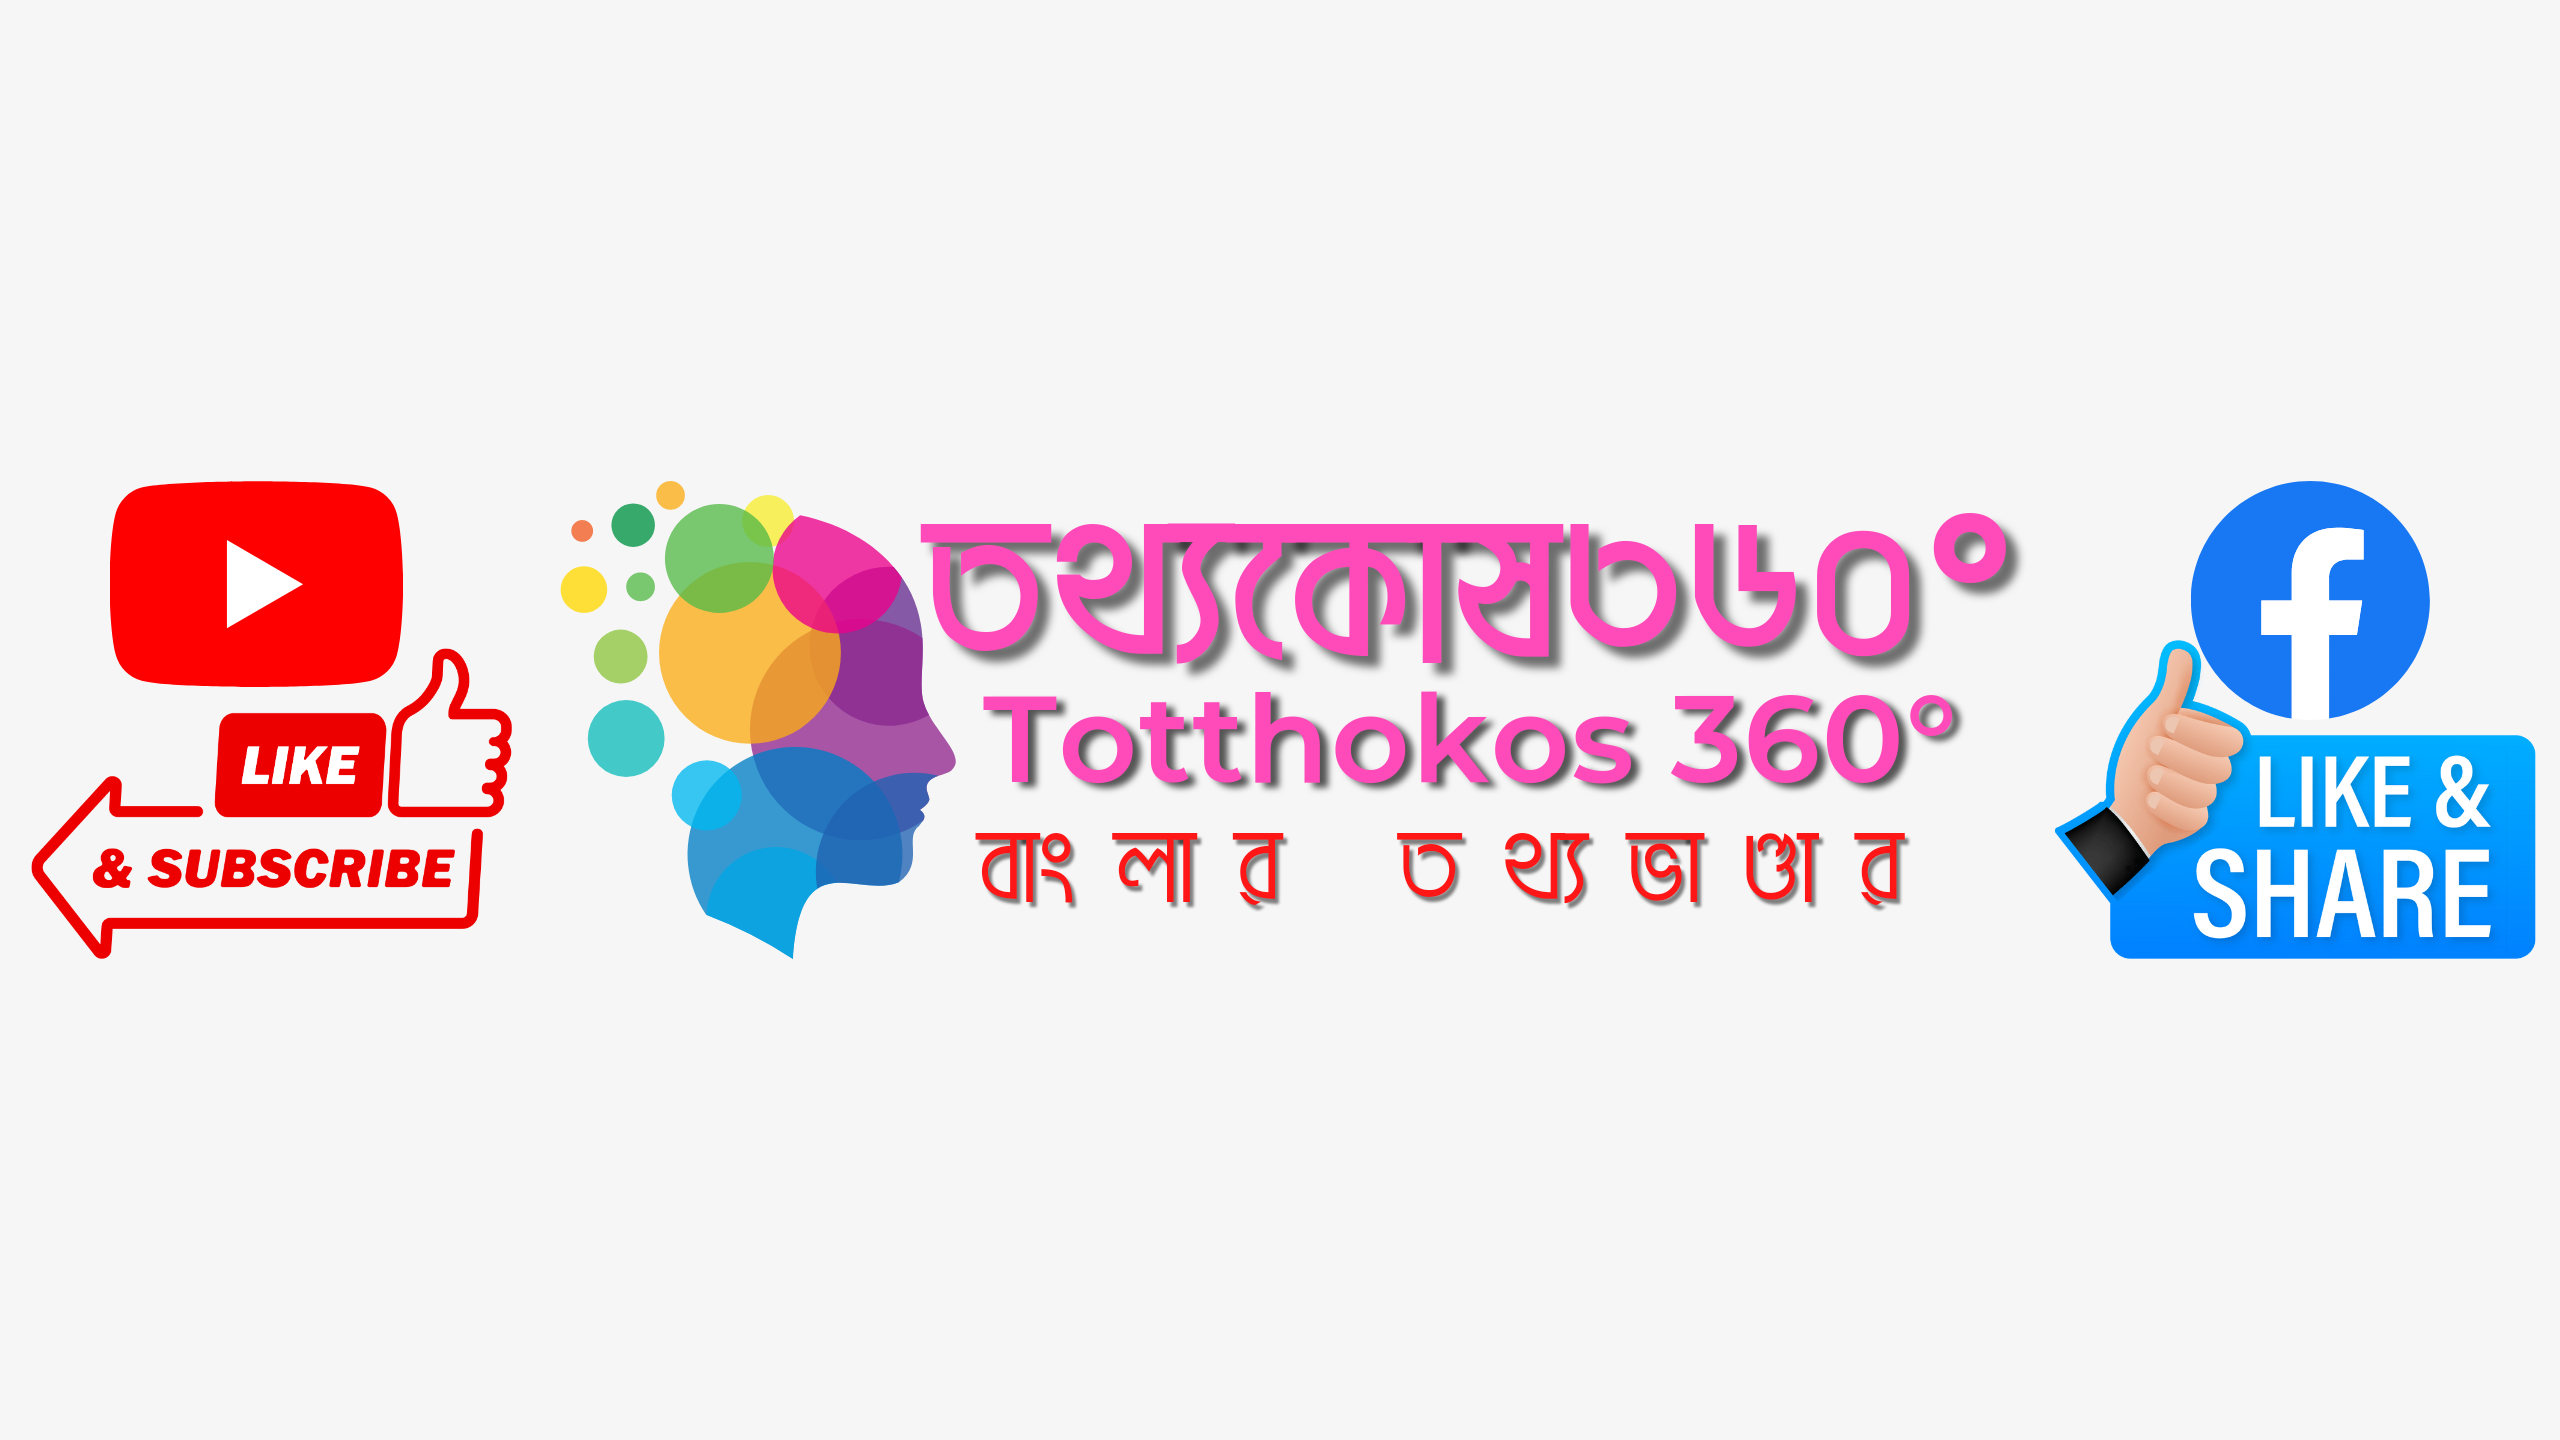 Totthokos360 YouTube Channel screenshot.png